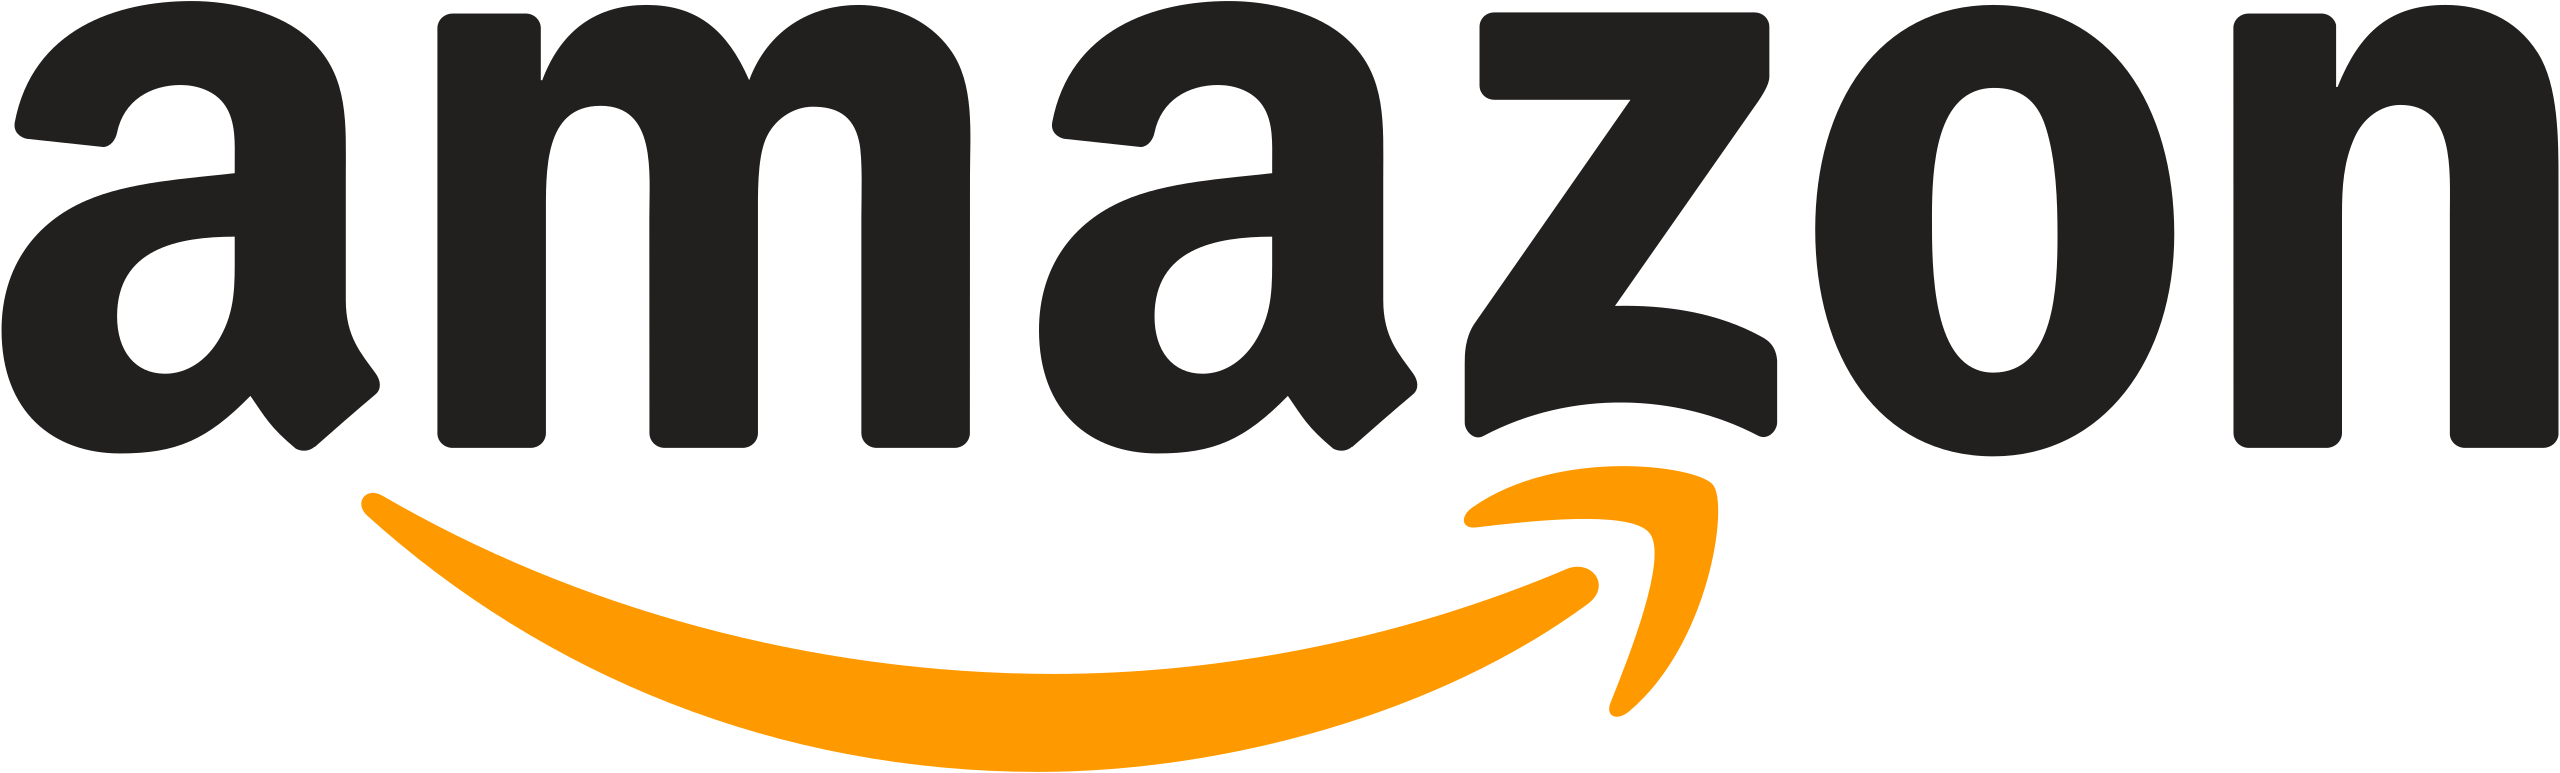 Amazon logo.svg - Wikipedia, la enciclopedia libre